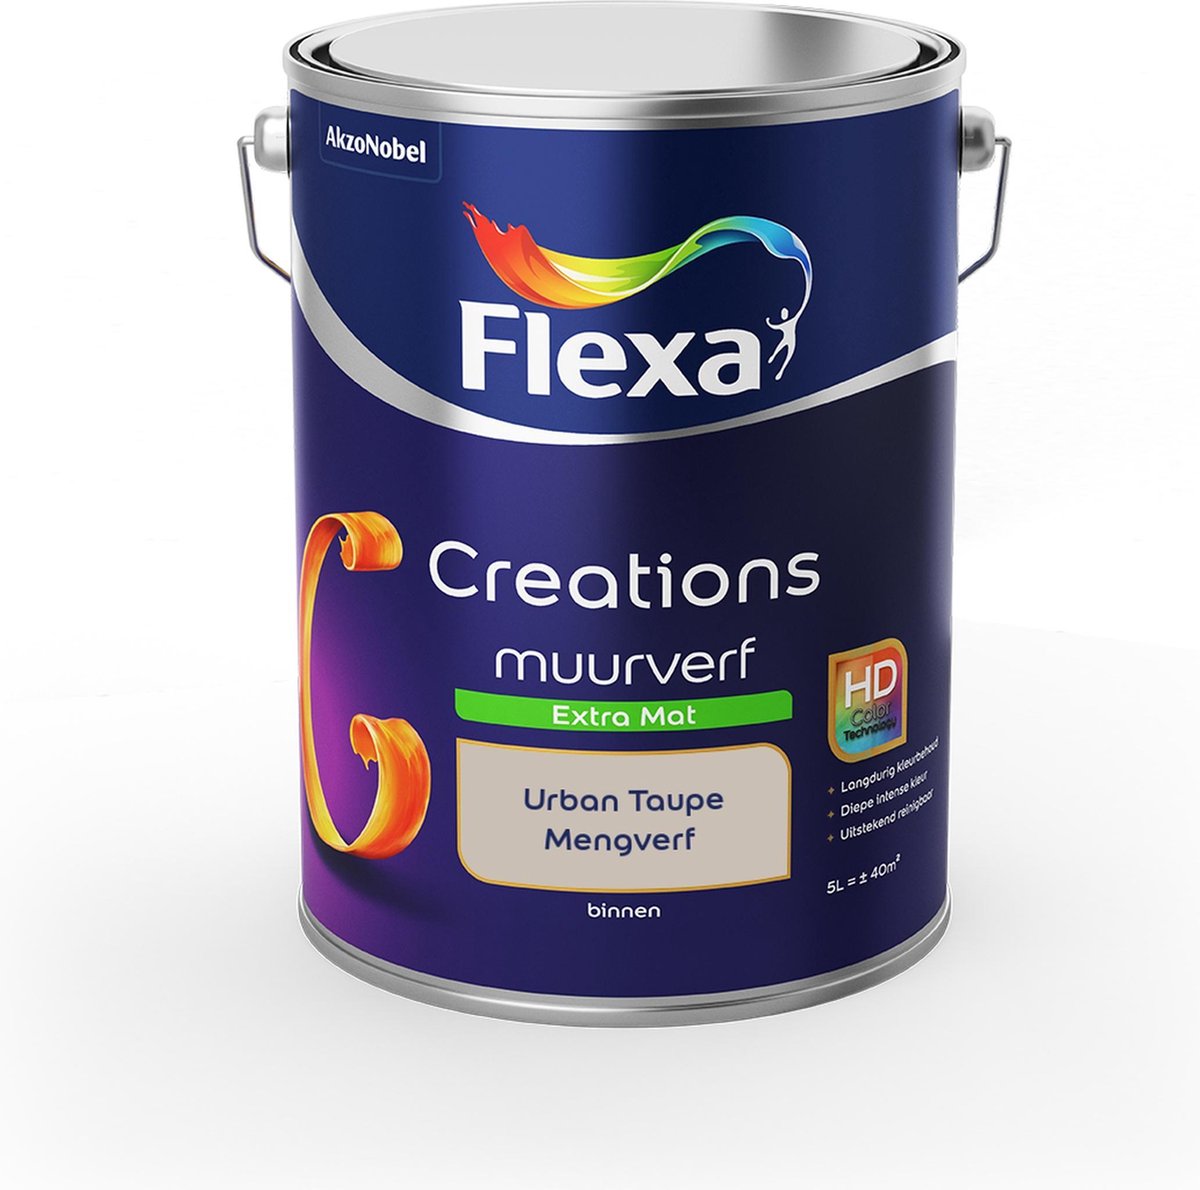 Flexa Creations Muurverf Extra Mat - Urban Taupe - Mengkleuren Collectie - 5 Liter